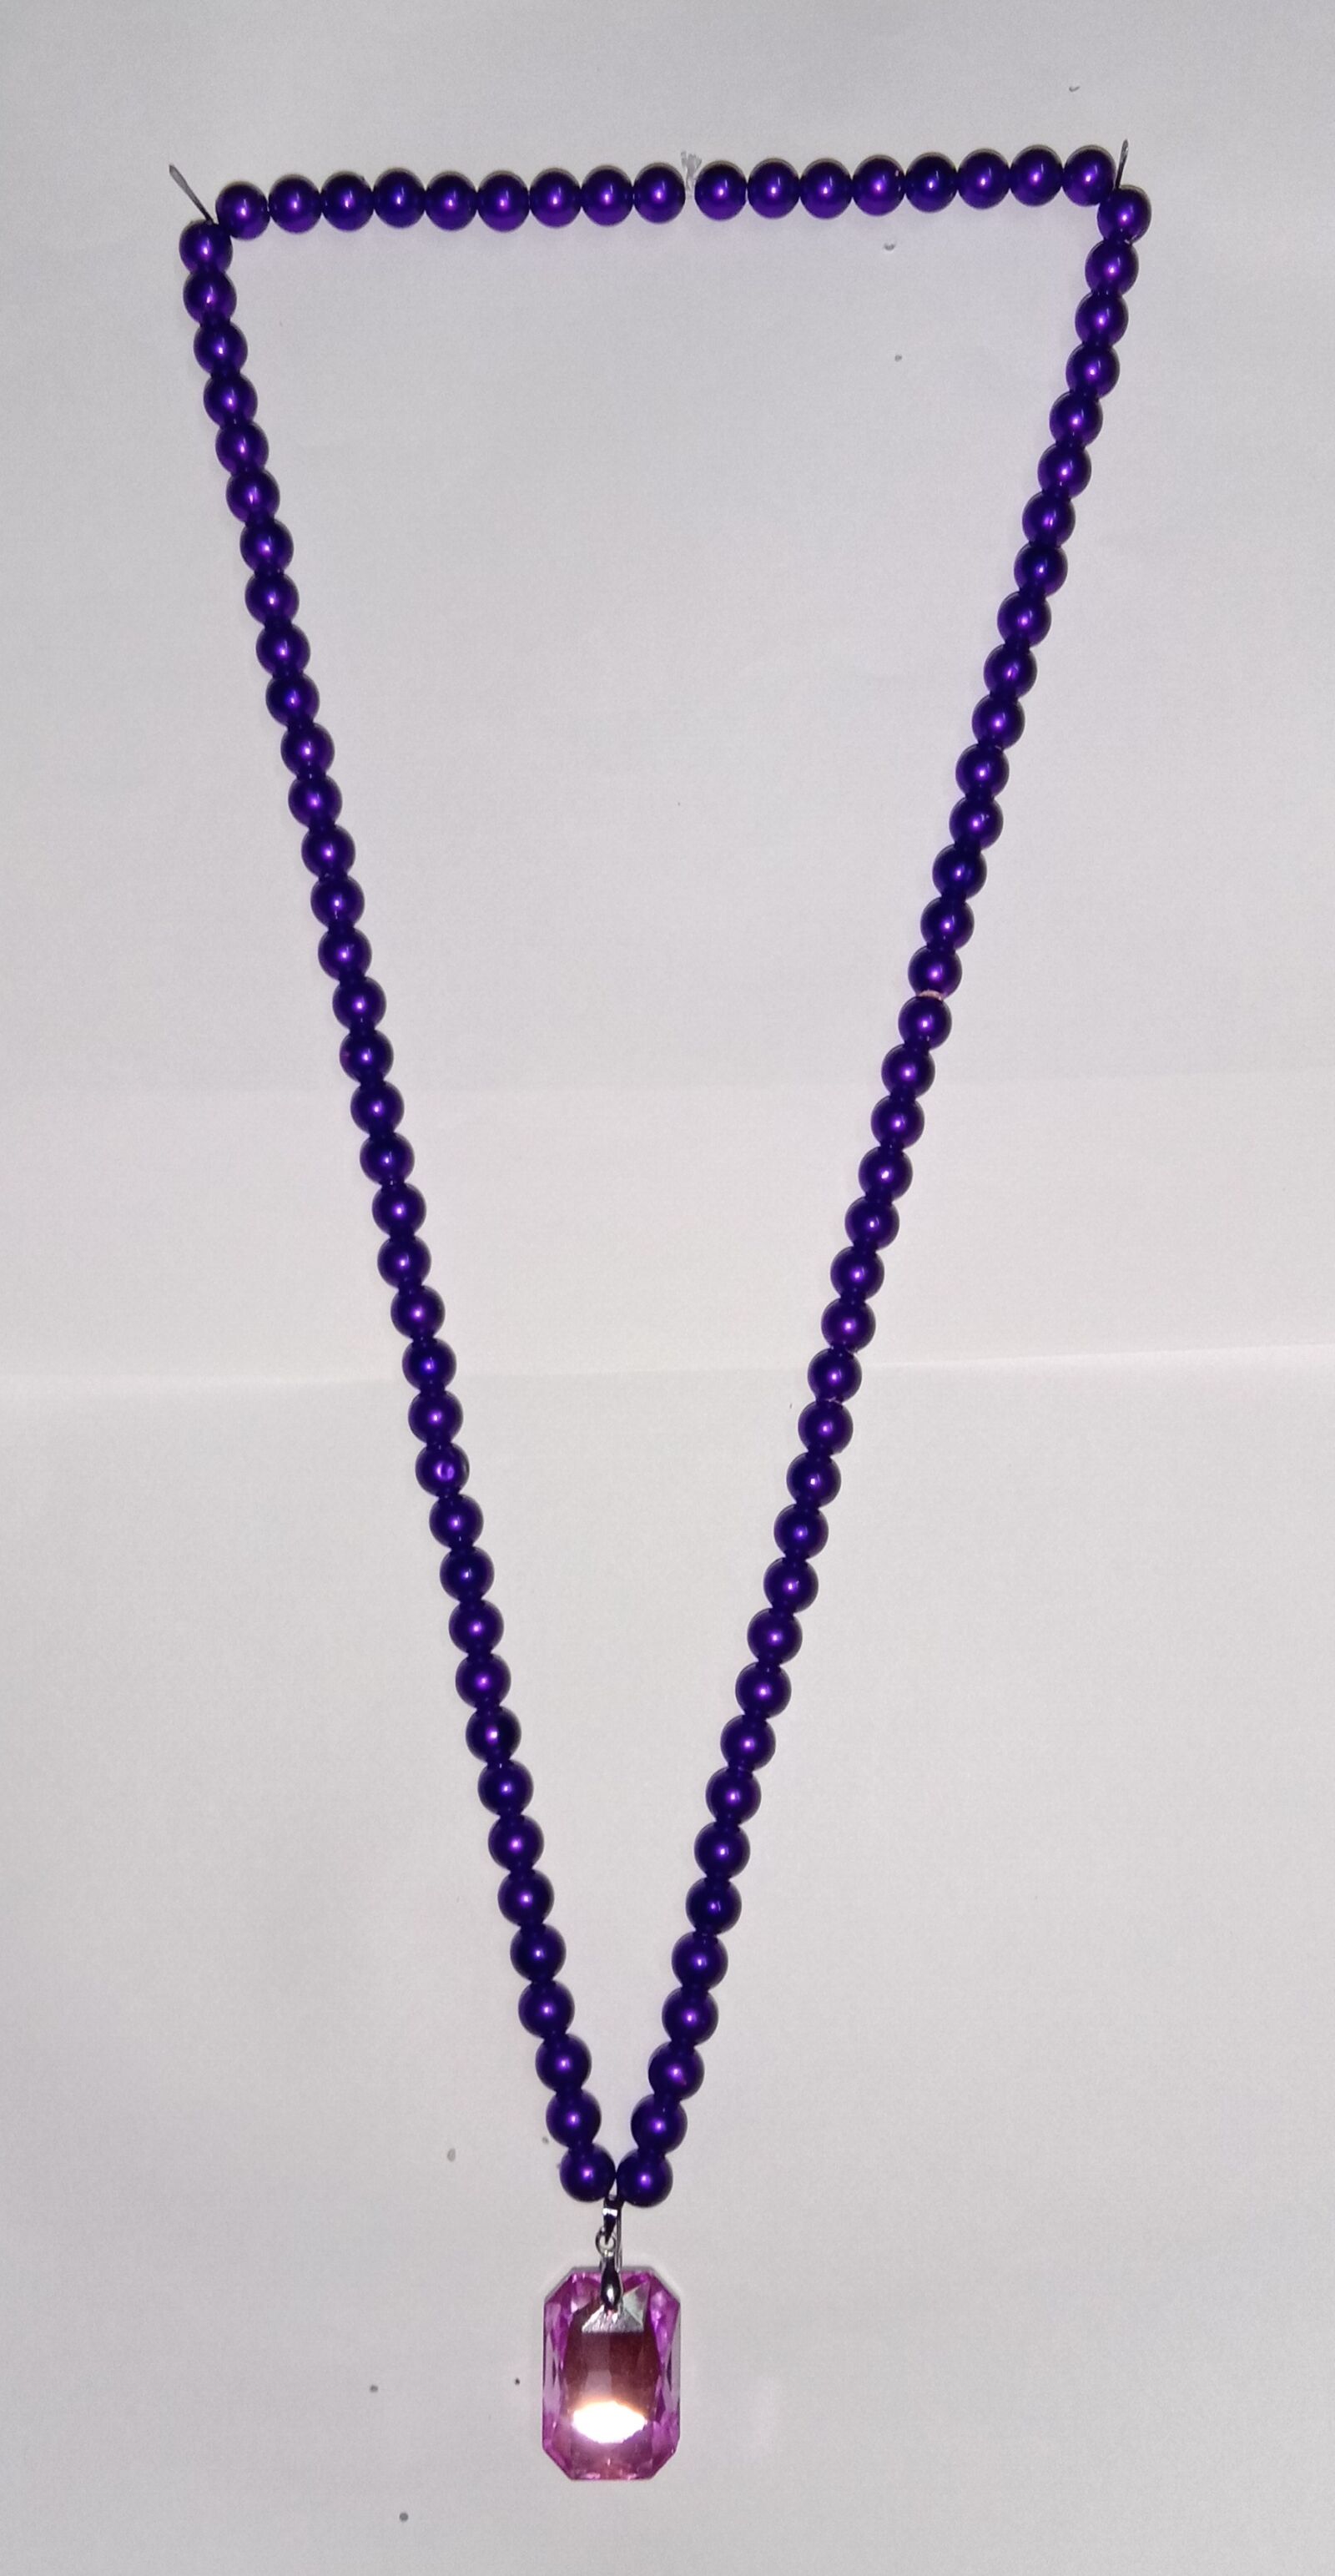 vivo 1726 sample photo. Beads chain, plastics chain photography